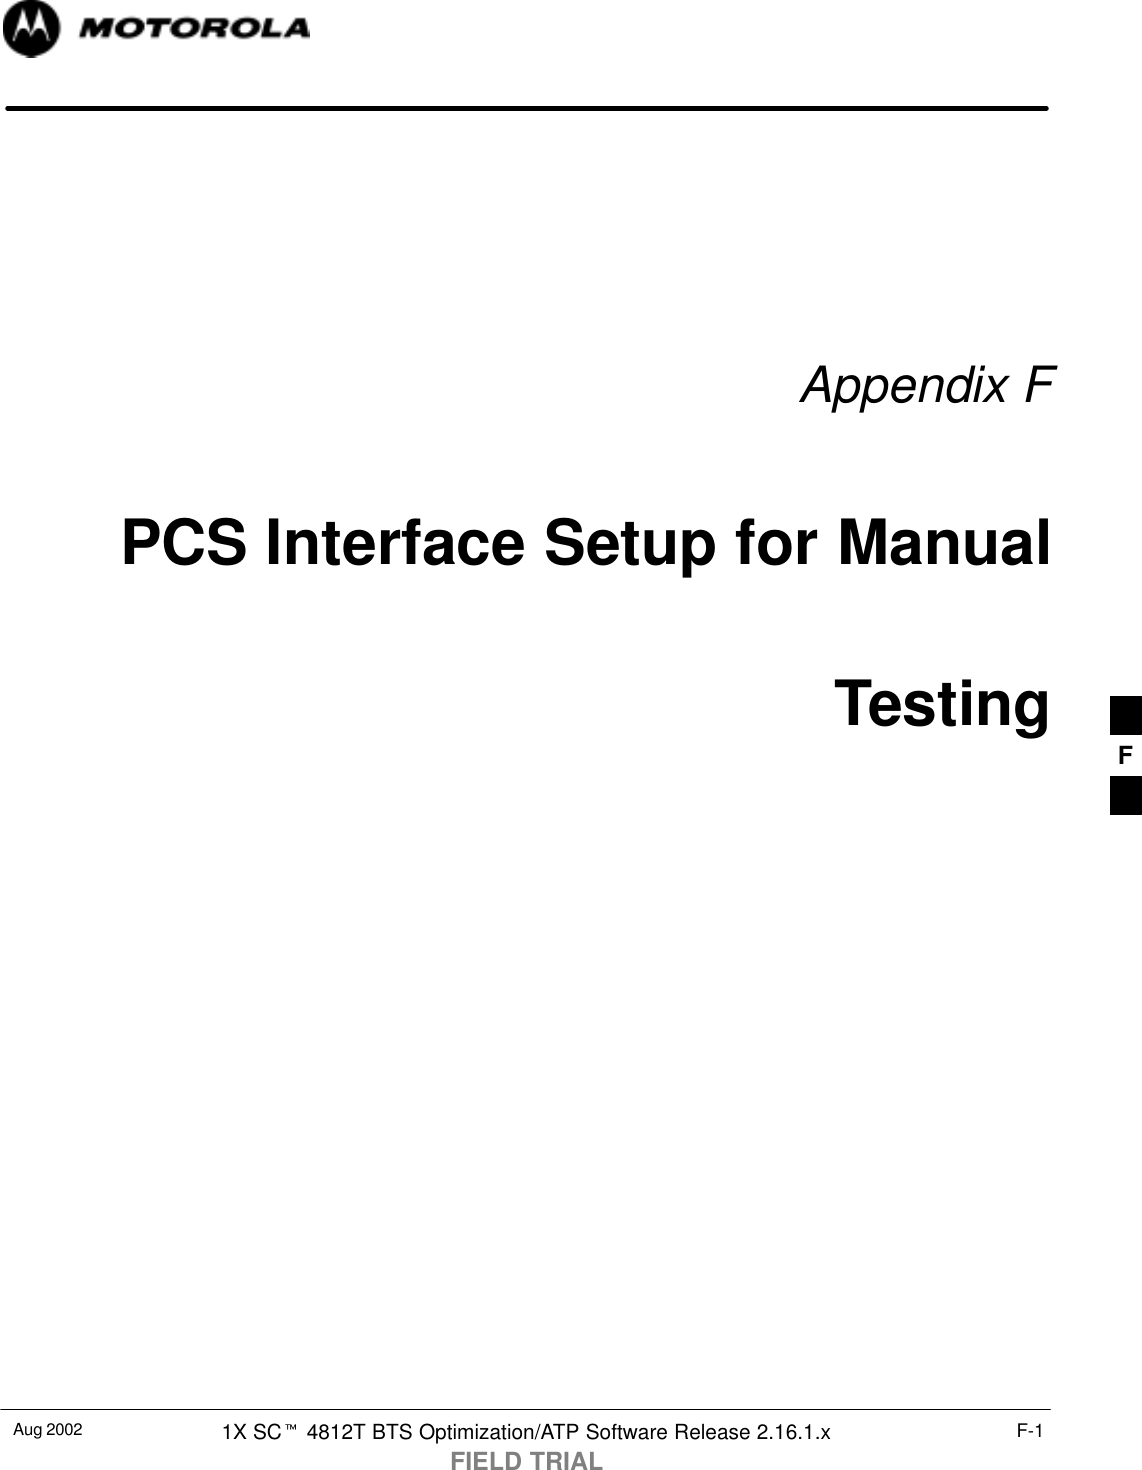 Aug 2002 1X SCt 4812T BTS Optimization/ATP Software Release 2.16.1.xFIELD TRIALF-1Appendix FPCS Interface Setup for ManualTesting F